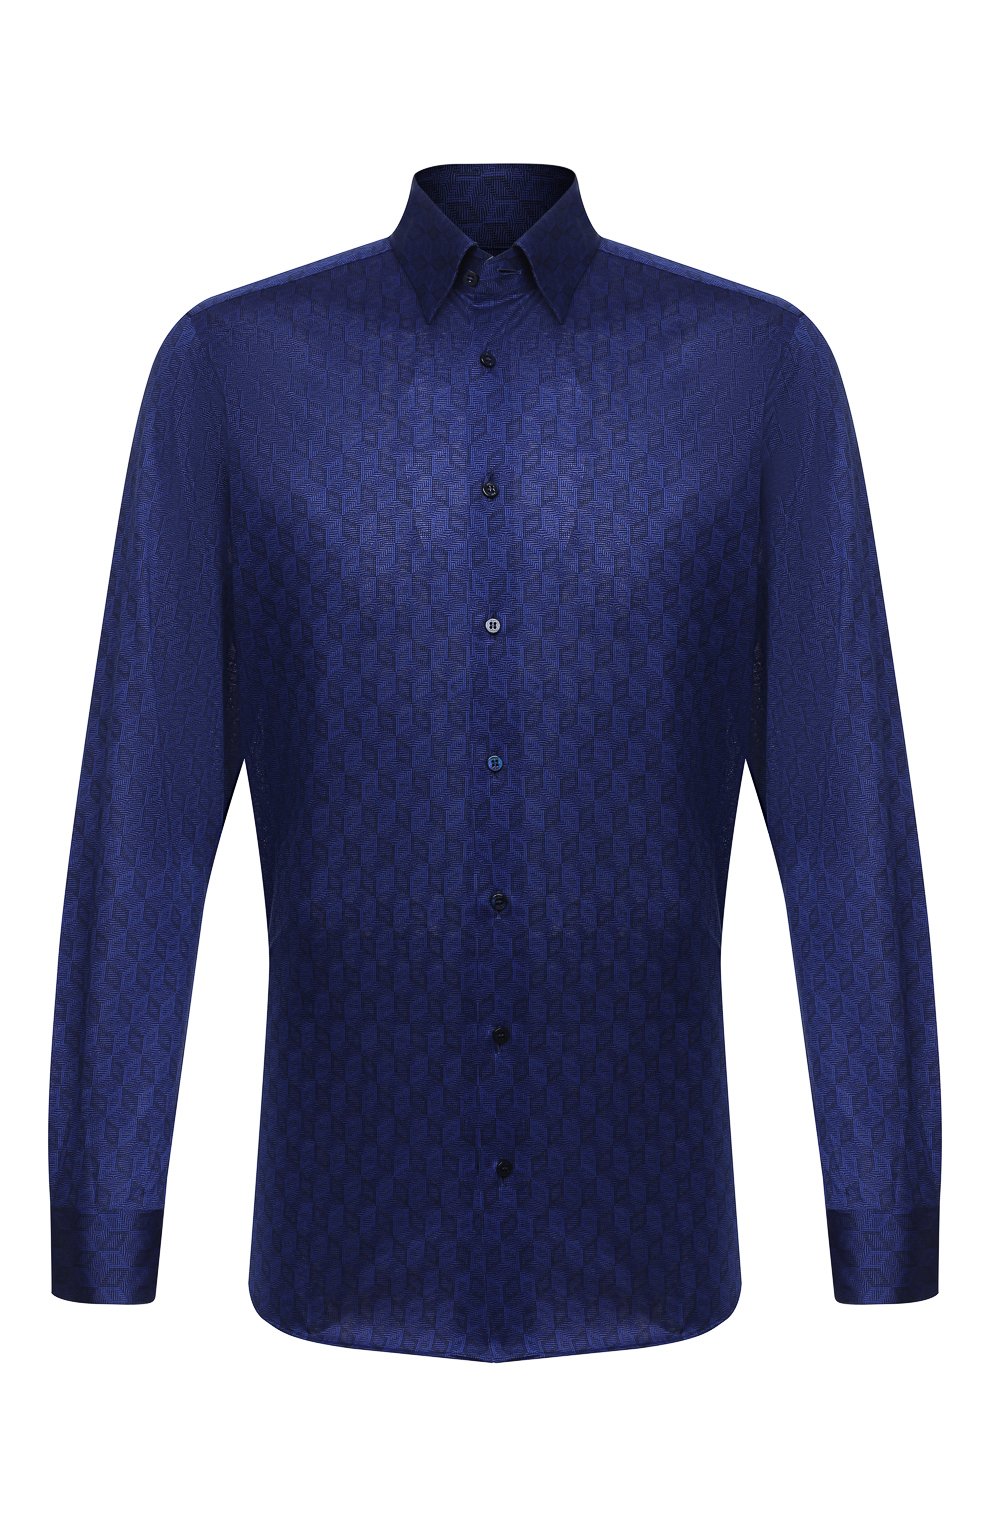 Хлопковая рубашка Zilli Синий MFU-56064-@/0001 5504925